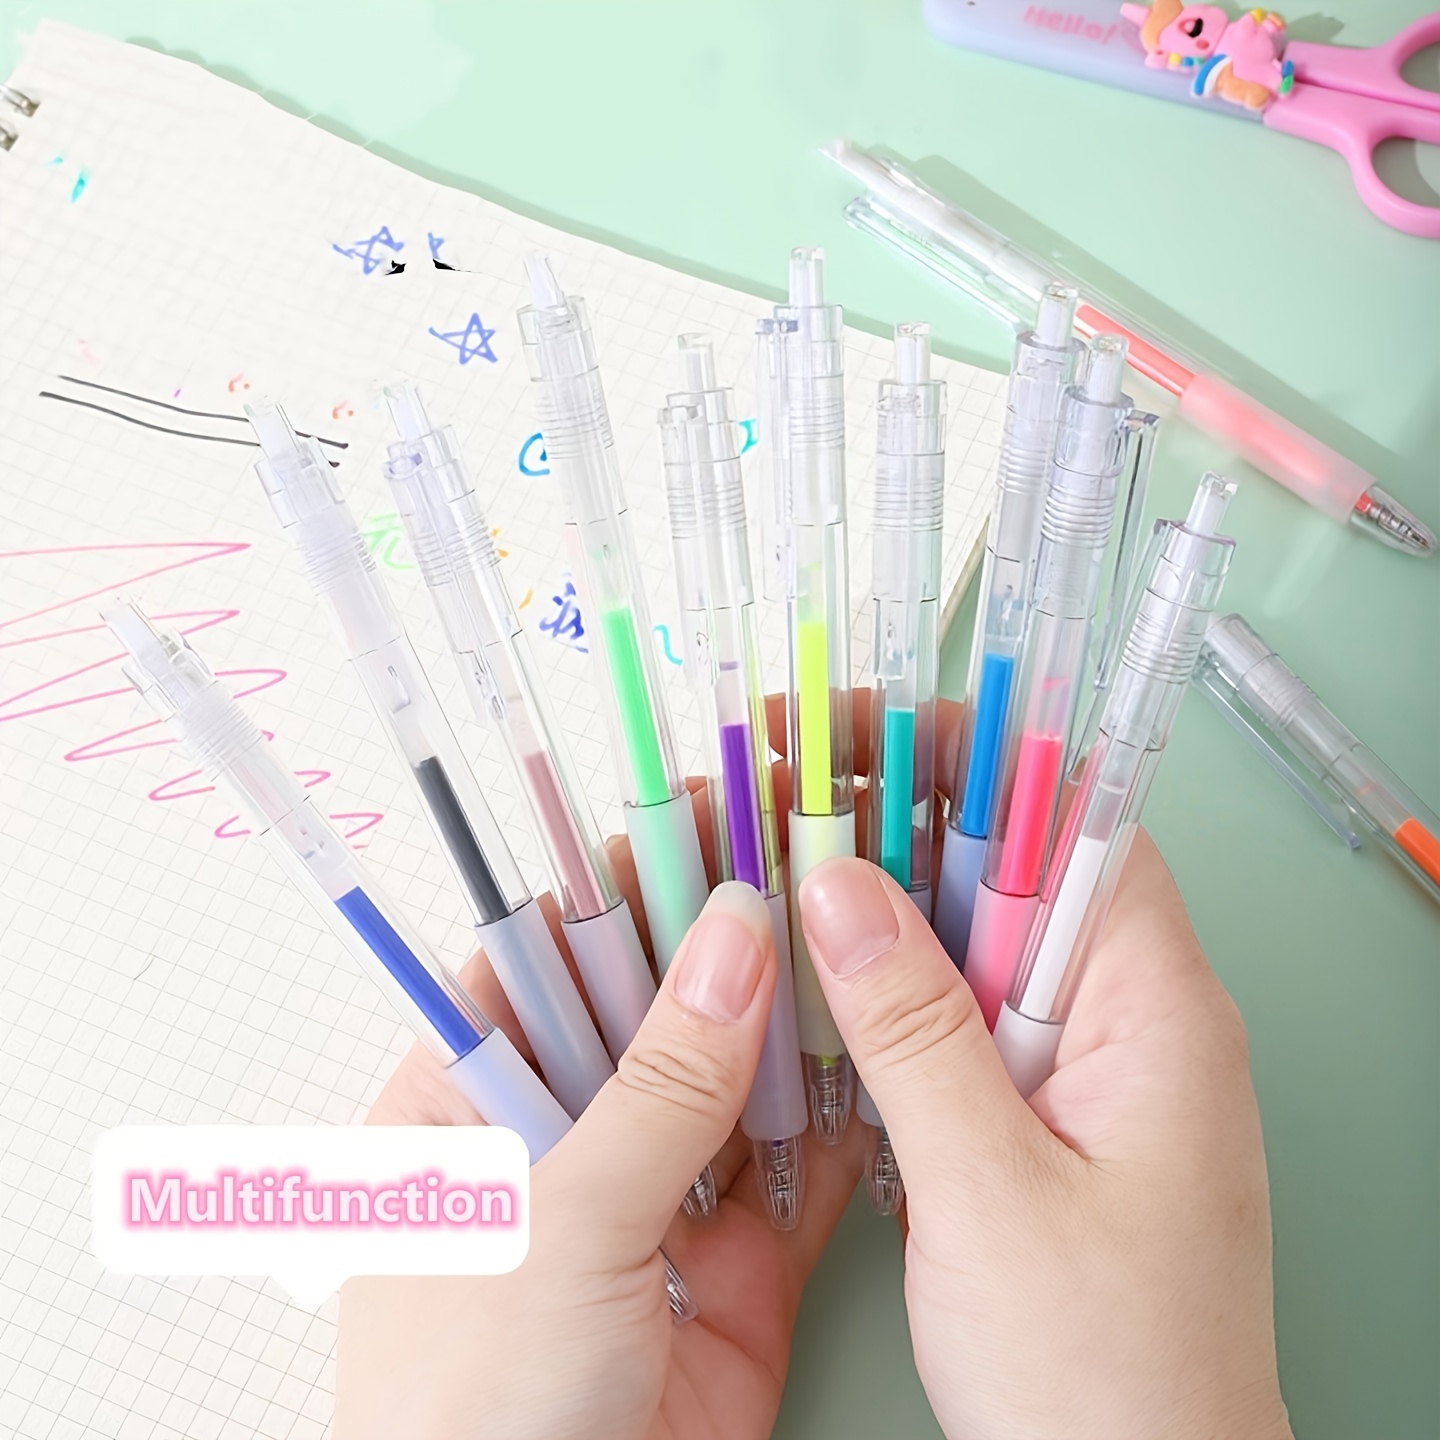 Diy Bubble Popcorn Drawing Pens, Magic Puffy Pens, Colorful Pens